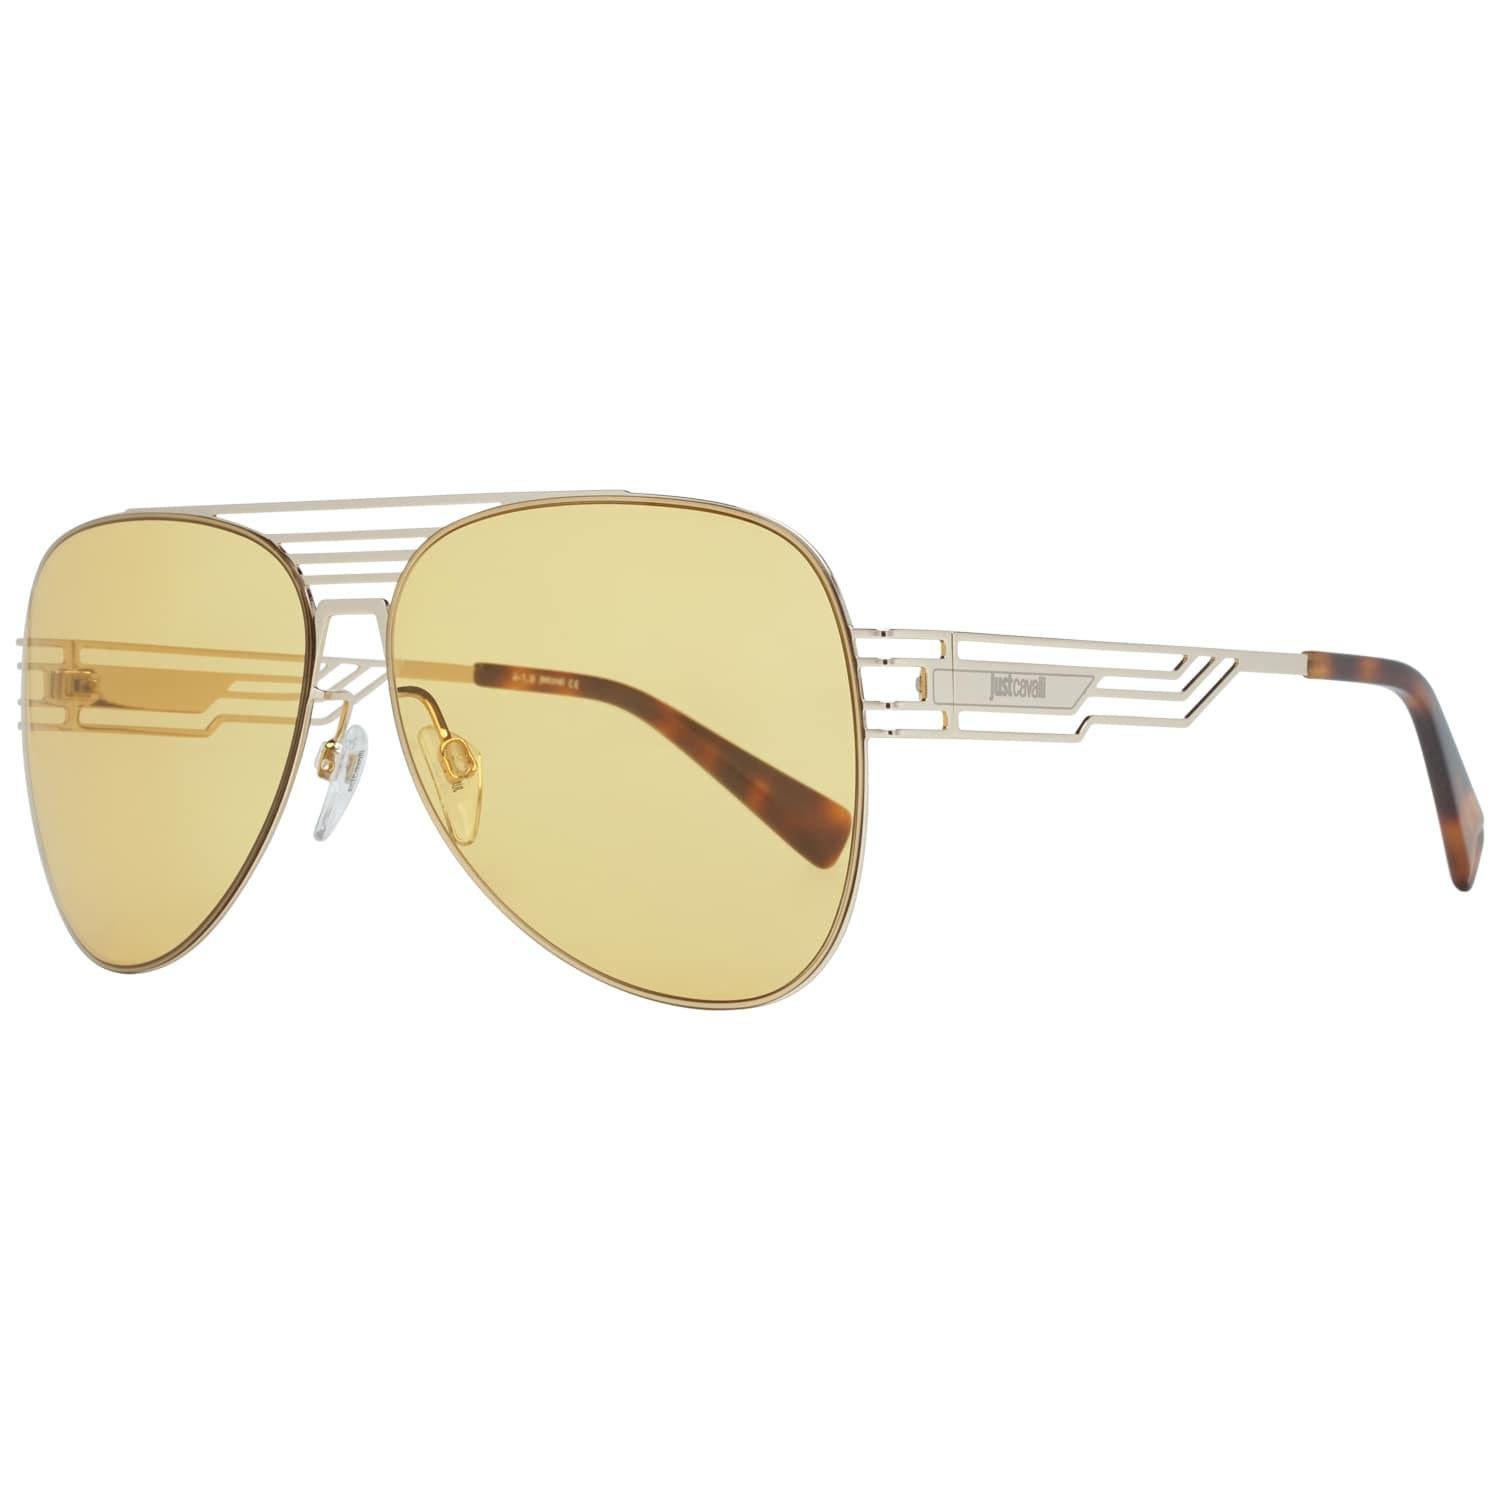 Just Cavalli Mint Unisex Gold Sunglasses JC914S 6132E 61-13-141 mm 3